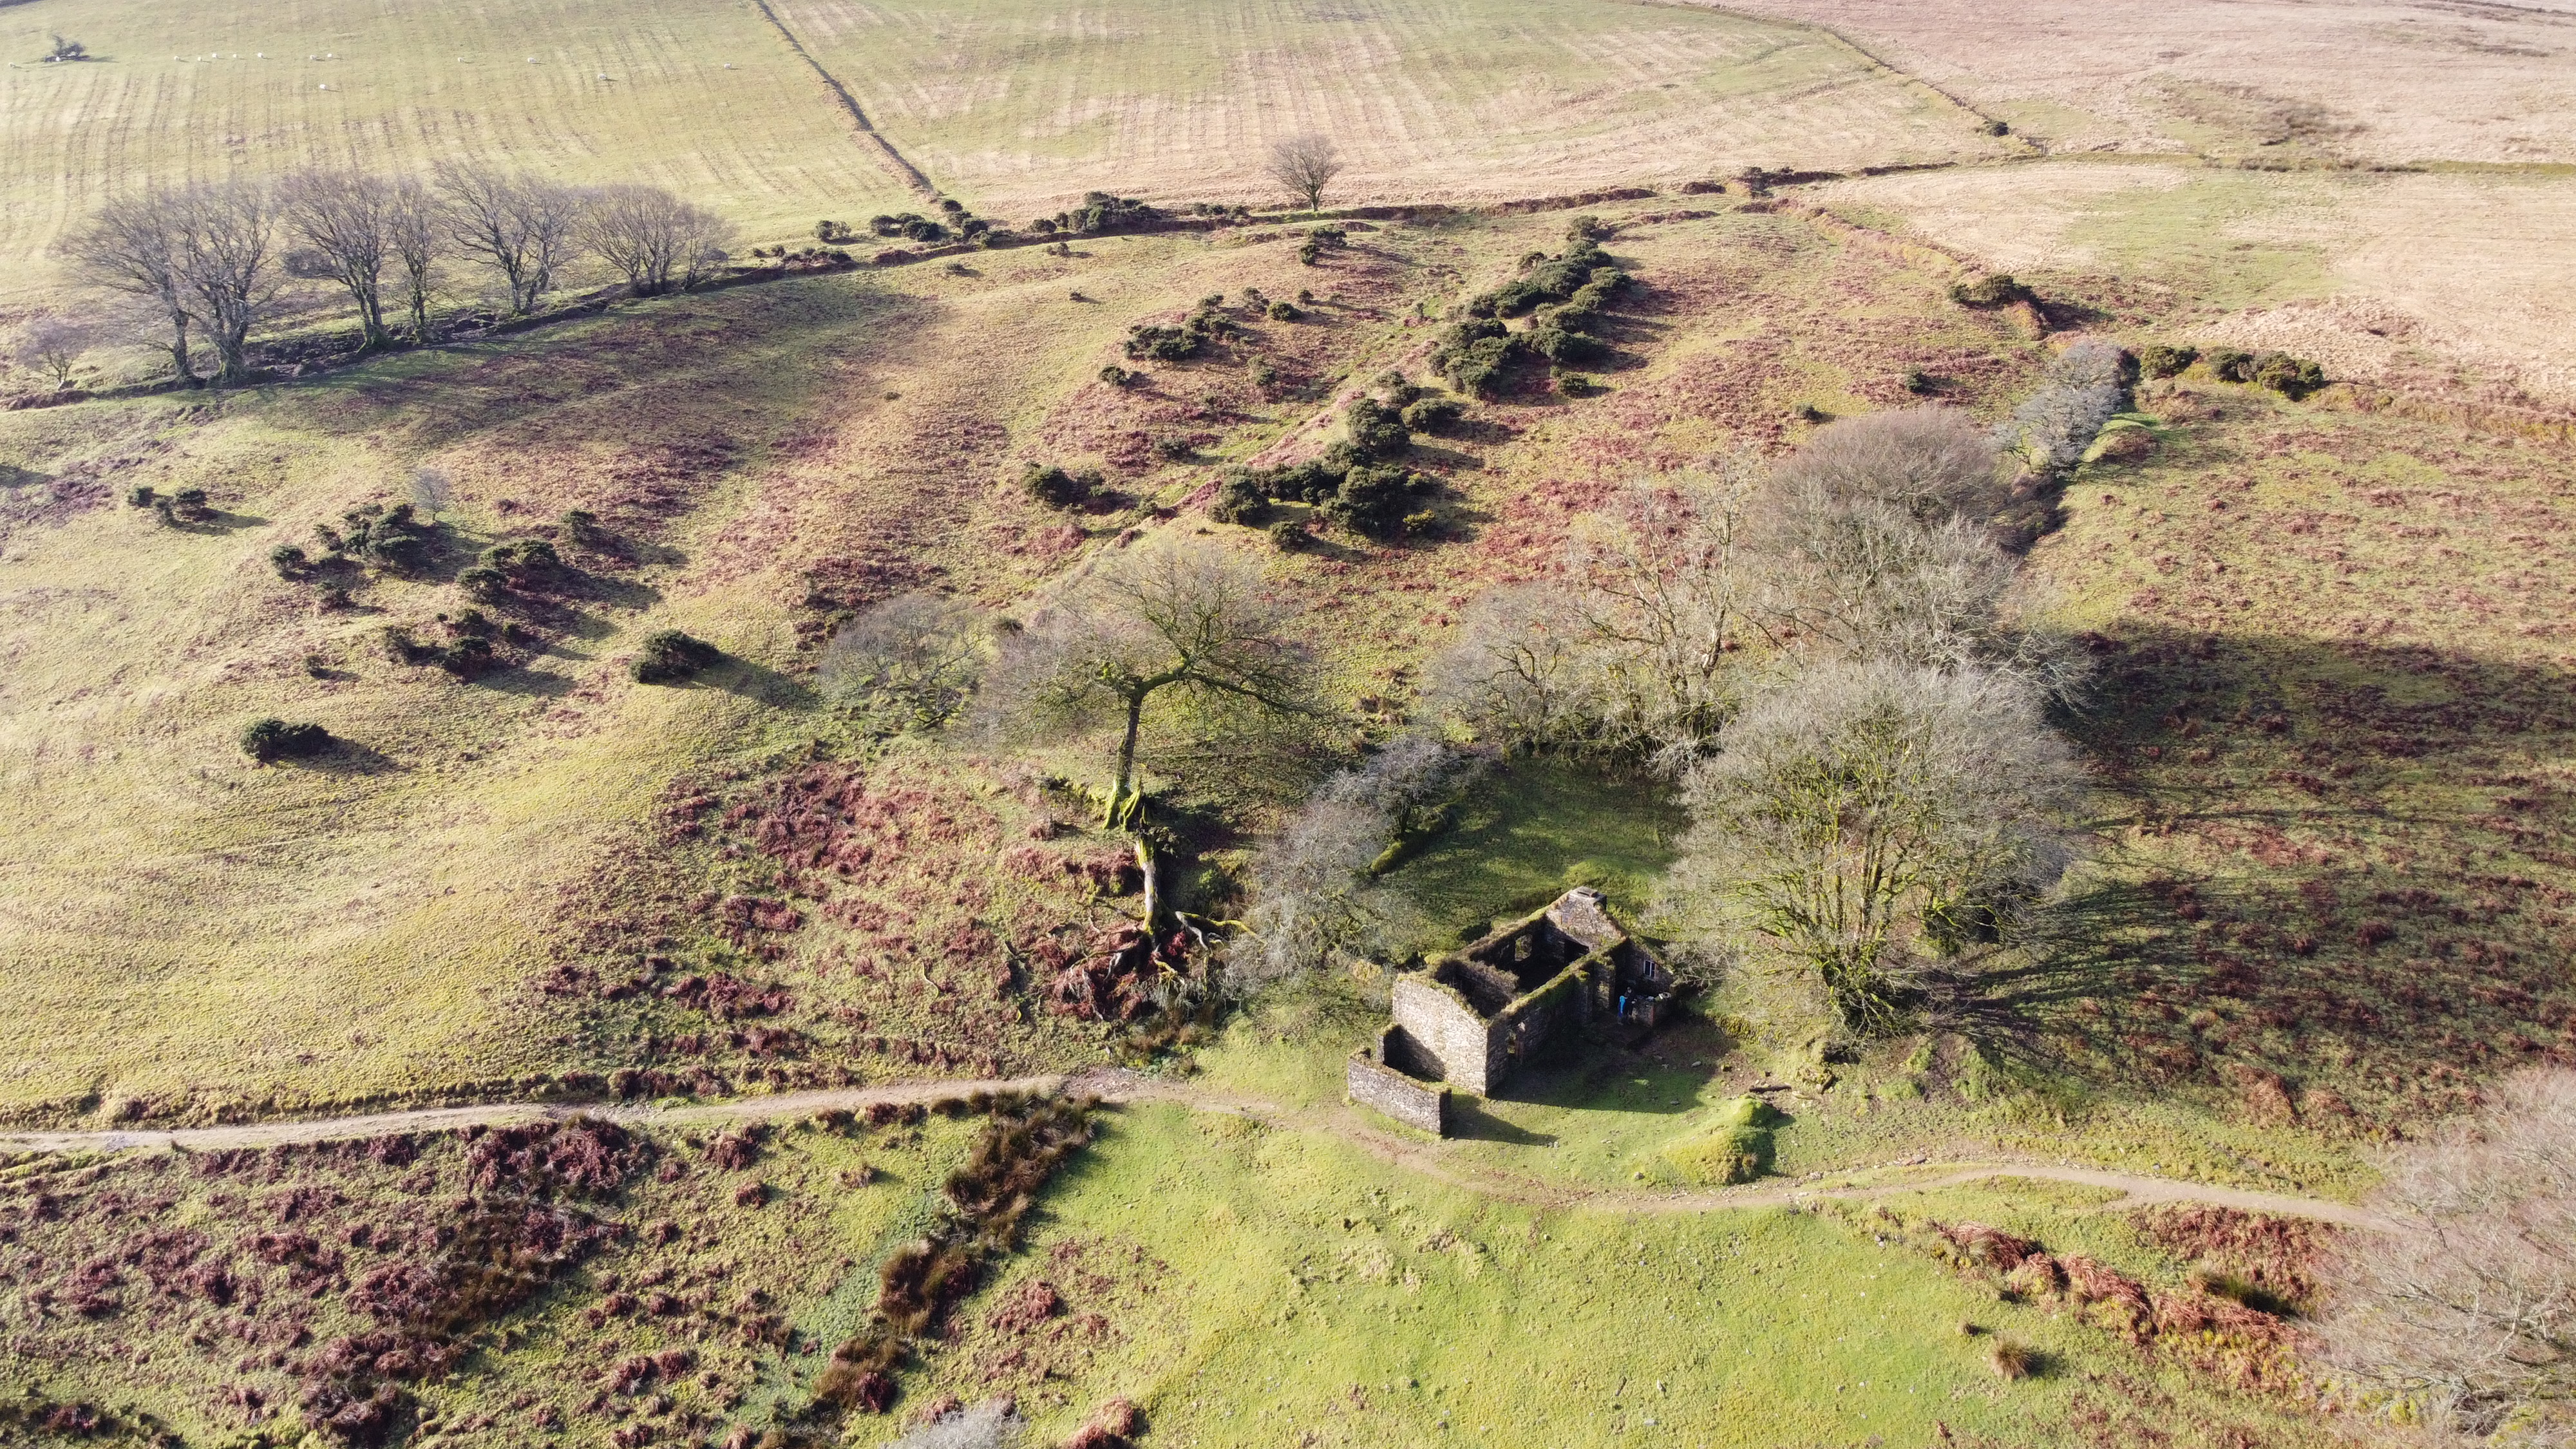 a drone camera view of Exmoor Landscape